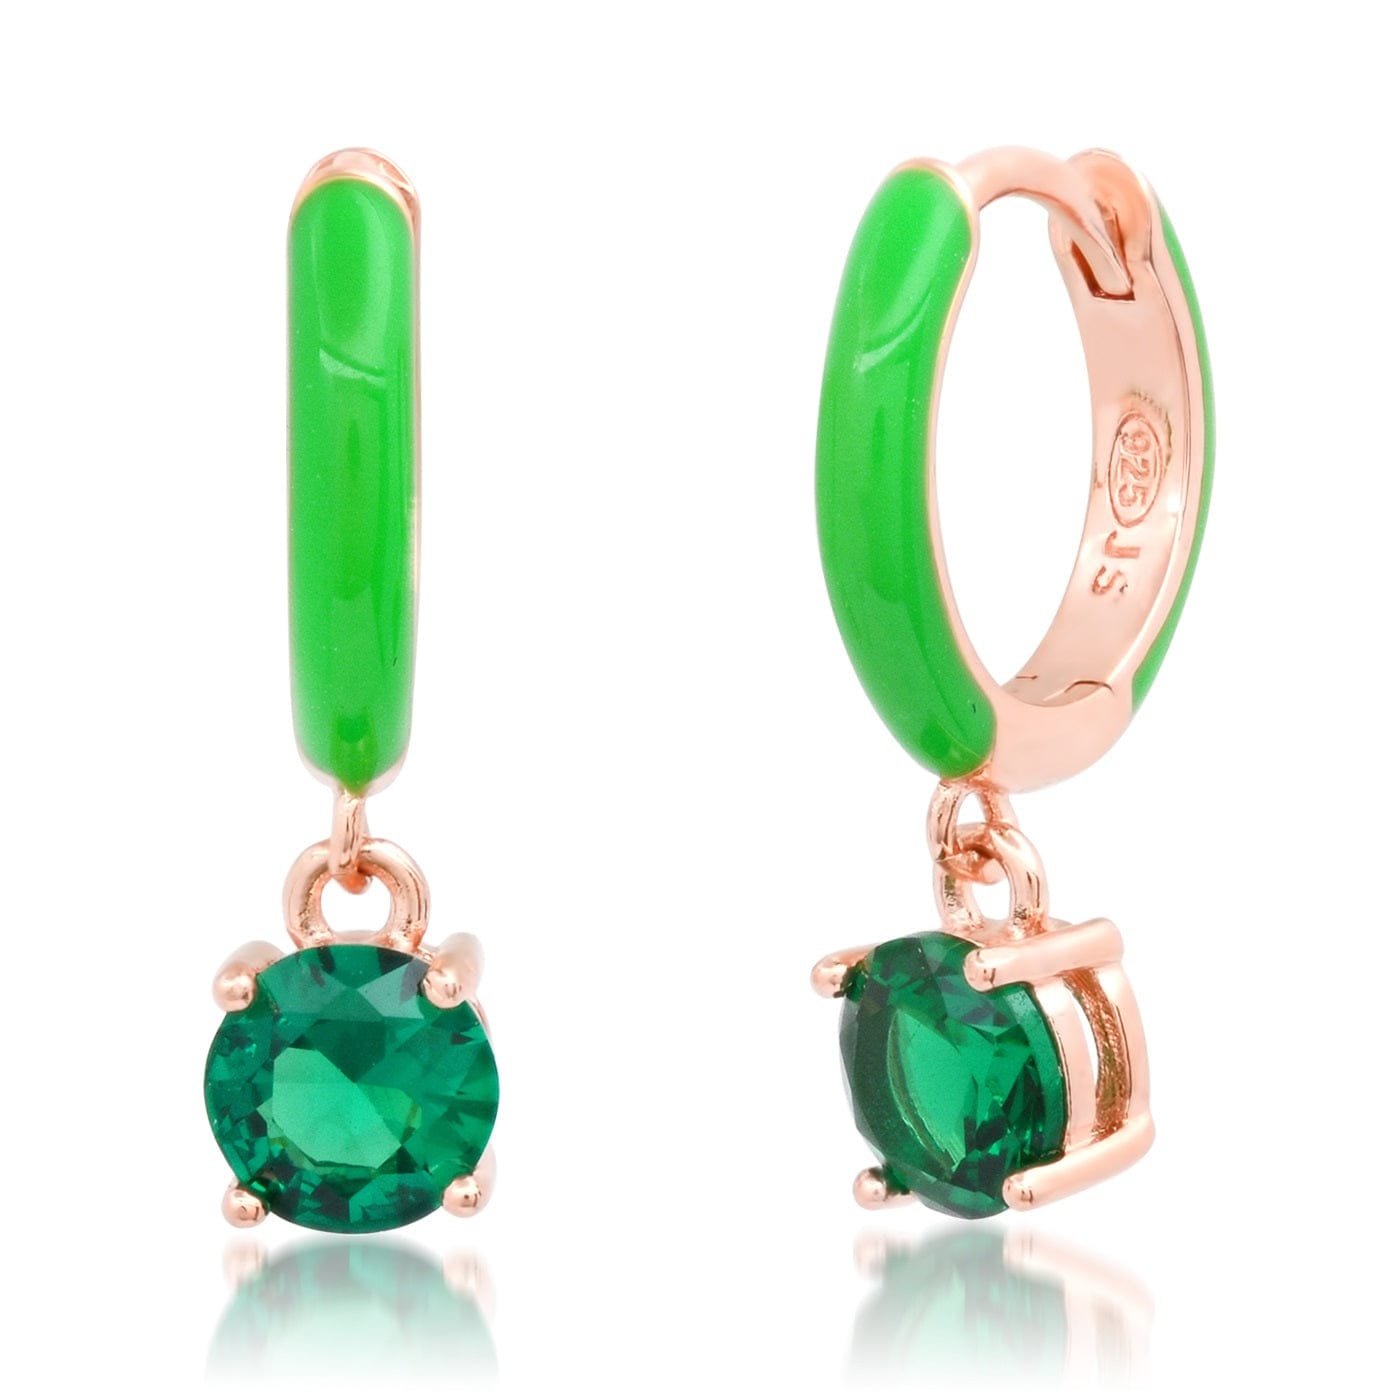 TAI JEWELRY Earrings Emerald Enamel Huggie with Colored CZ Charm